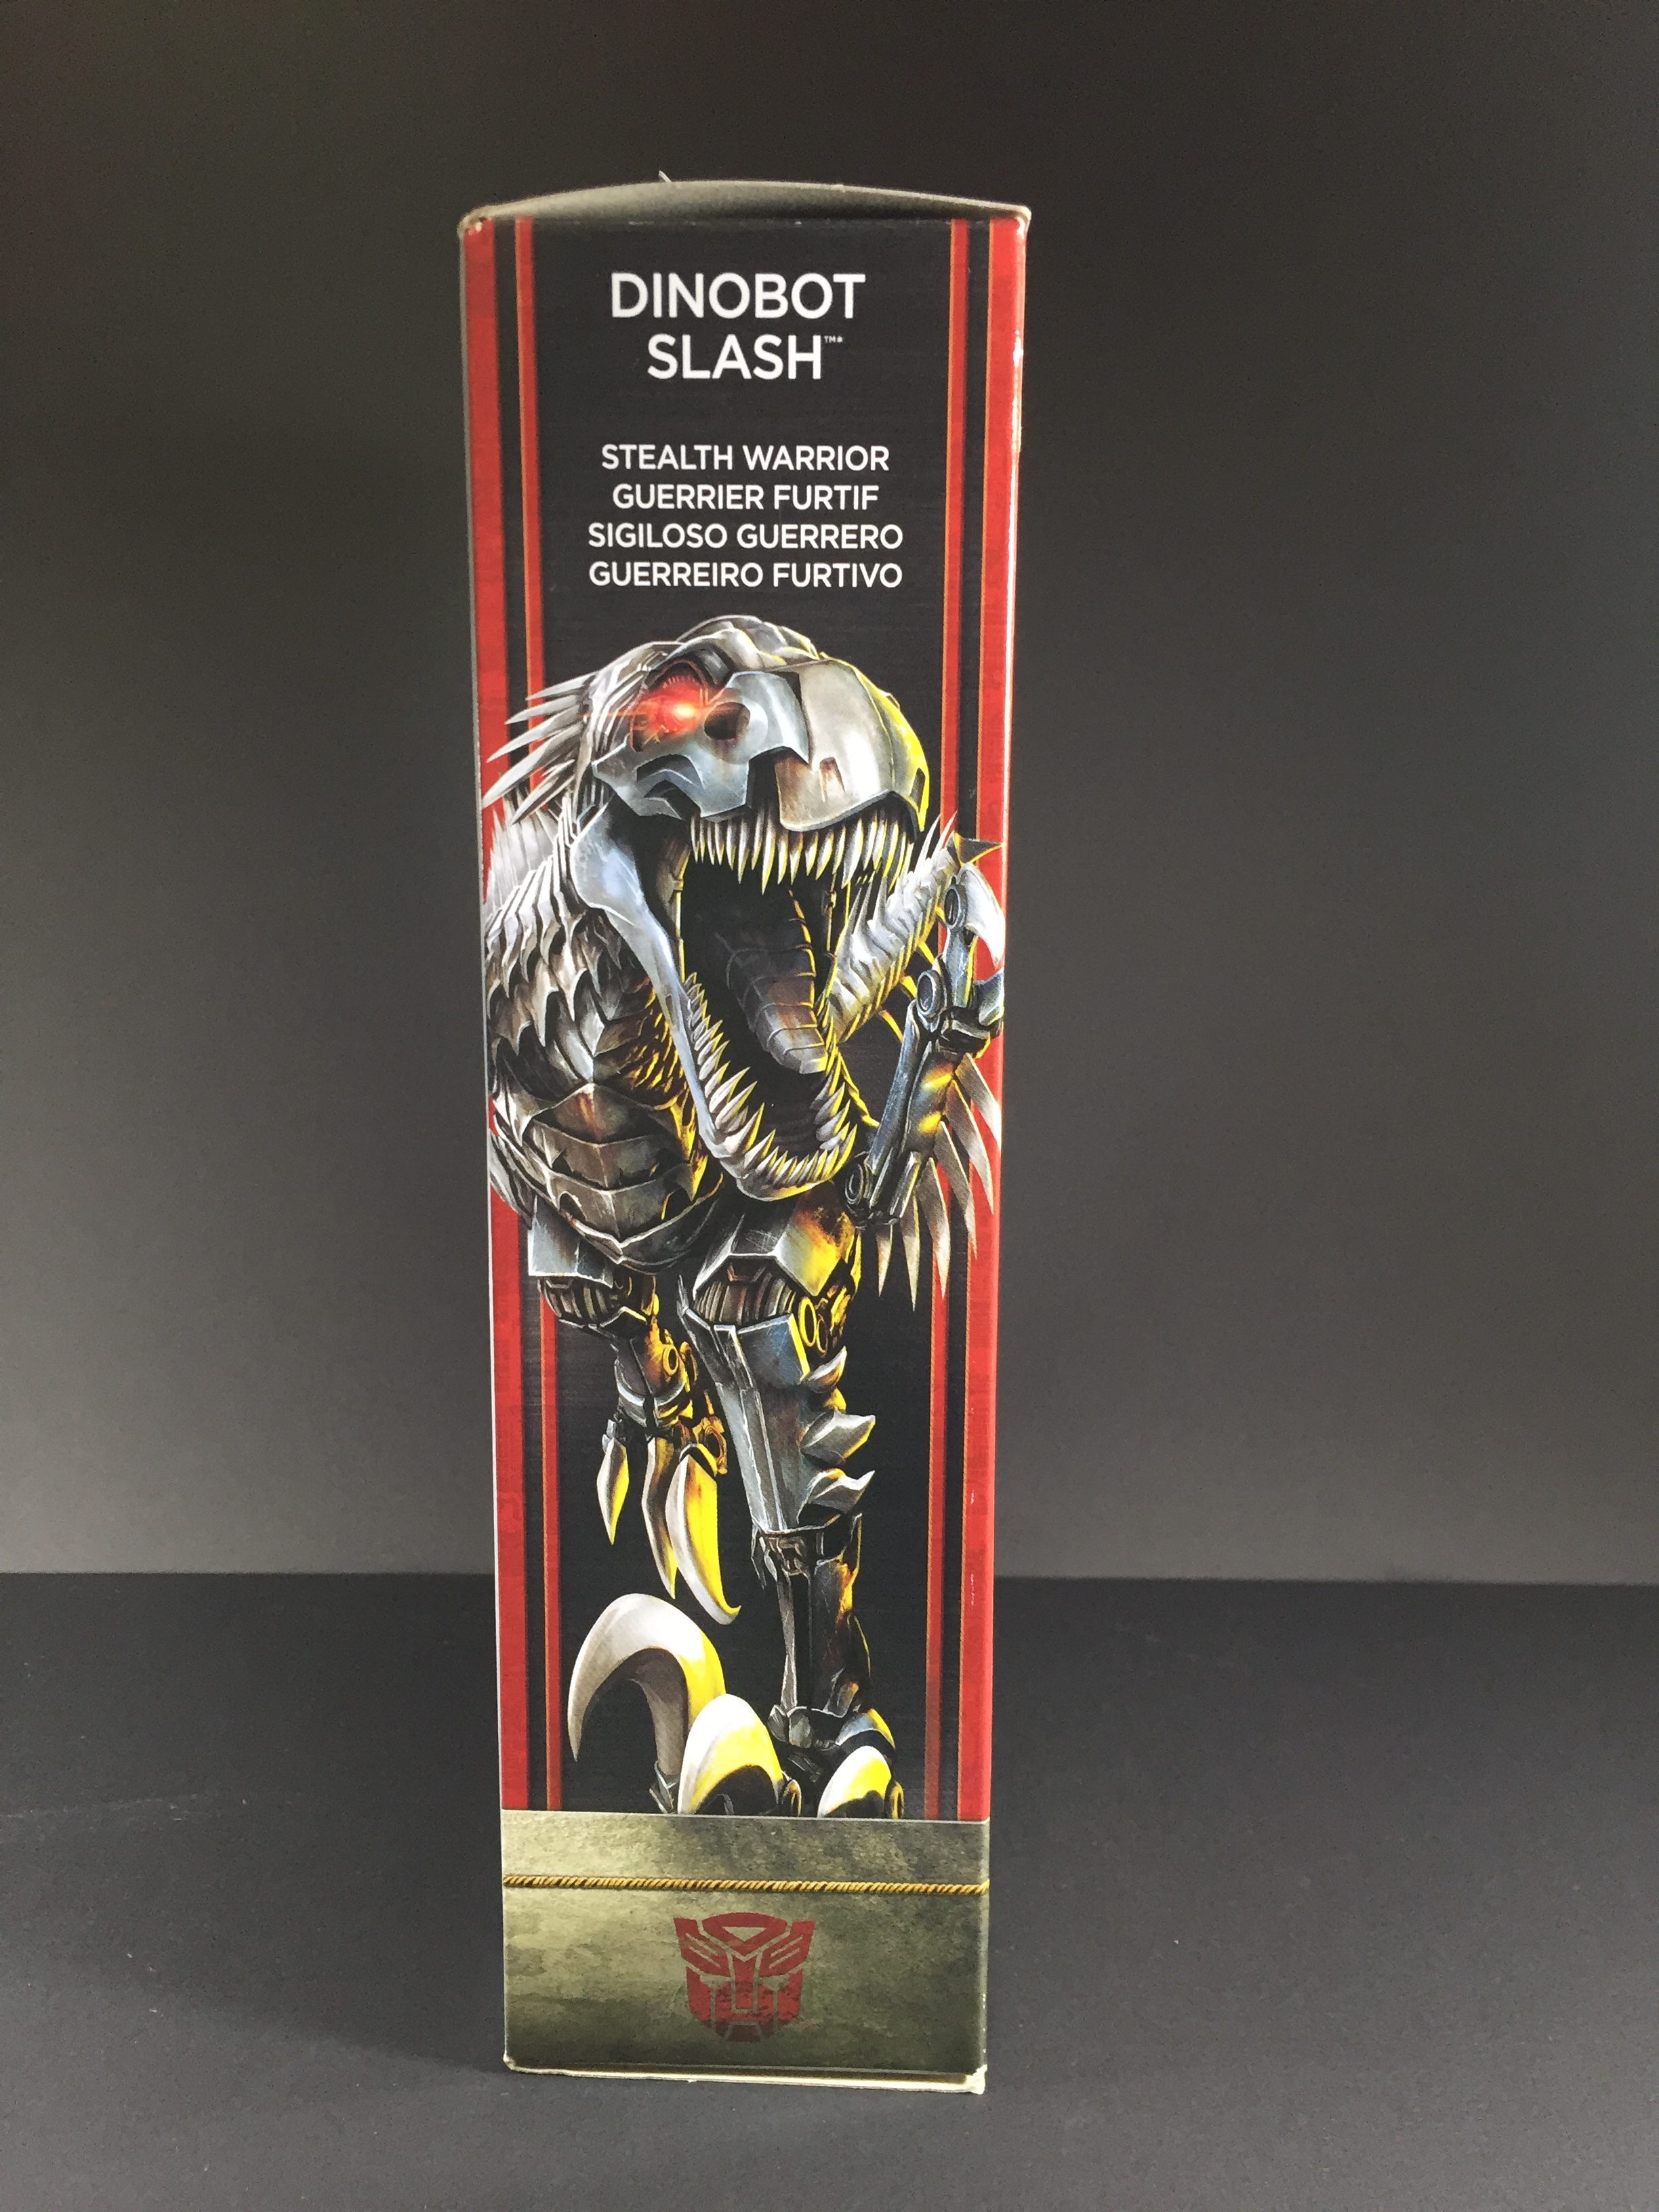 Slash, packaging. (Transformers: The Last Knight)